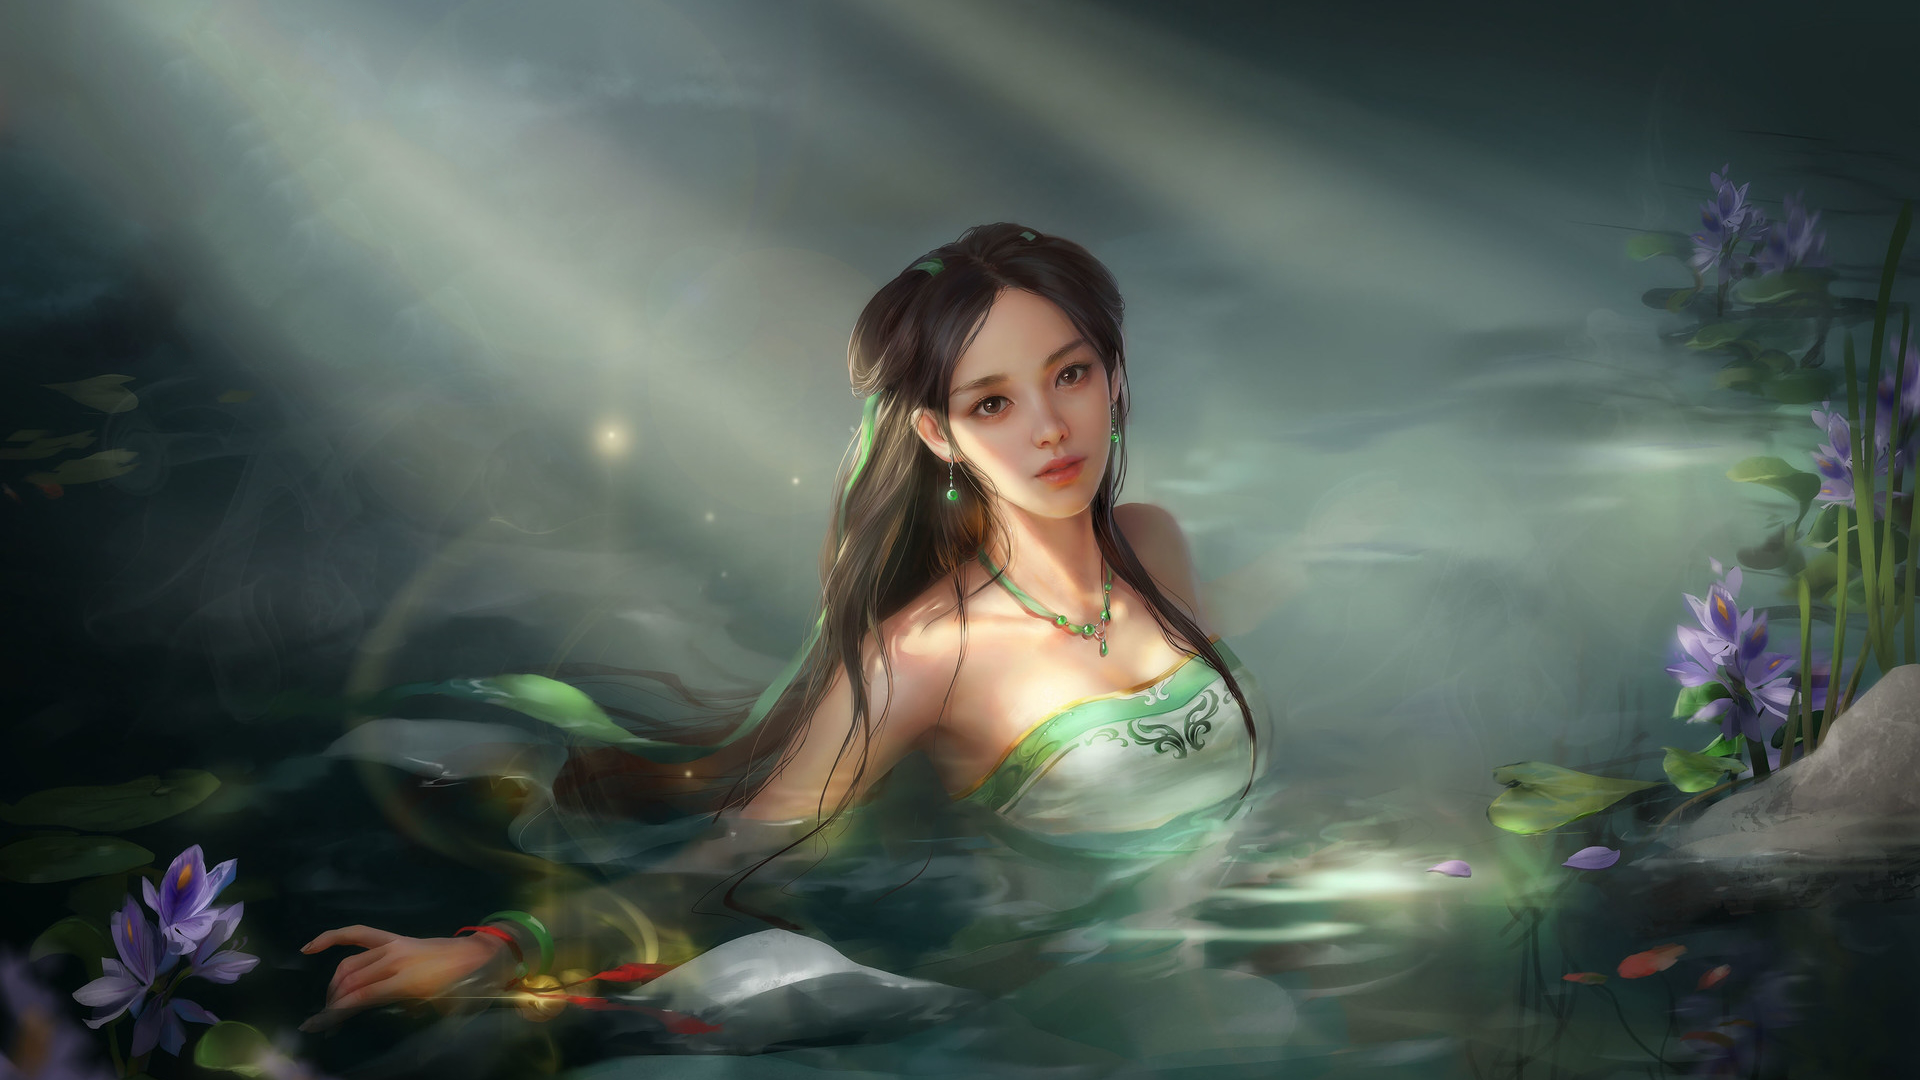 WuXia Xianxia Dark Hair Nature Water Flowers Plants Necklace Long Hair Women Outdoors Fantasy Art Fa 1920x1080